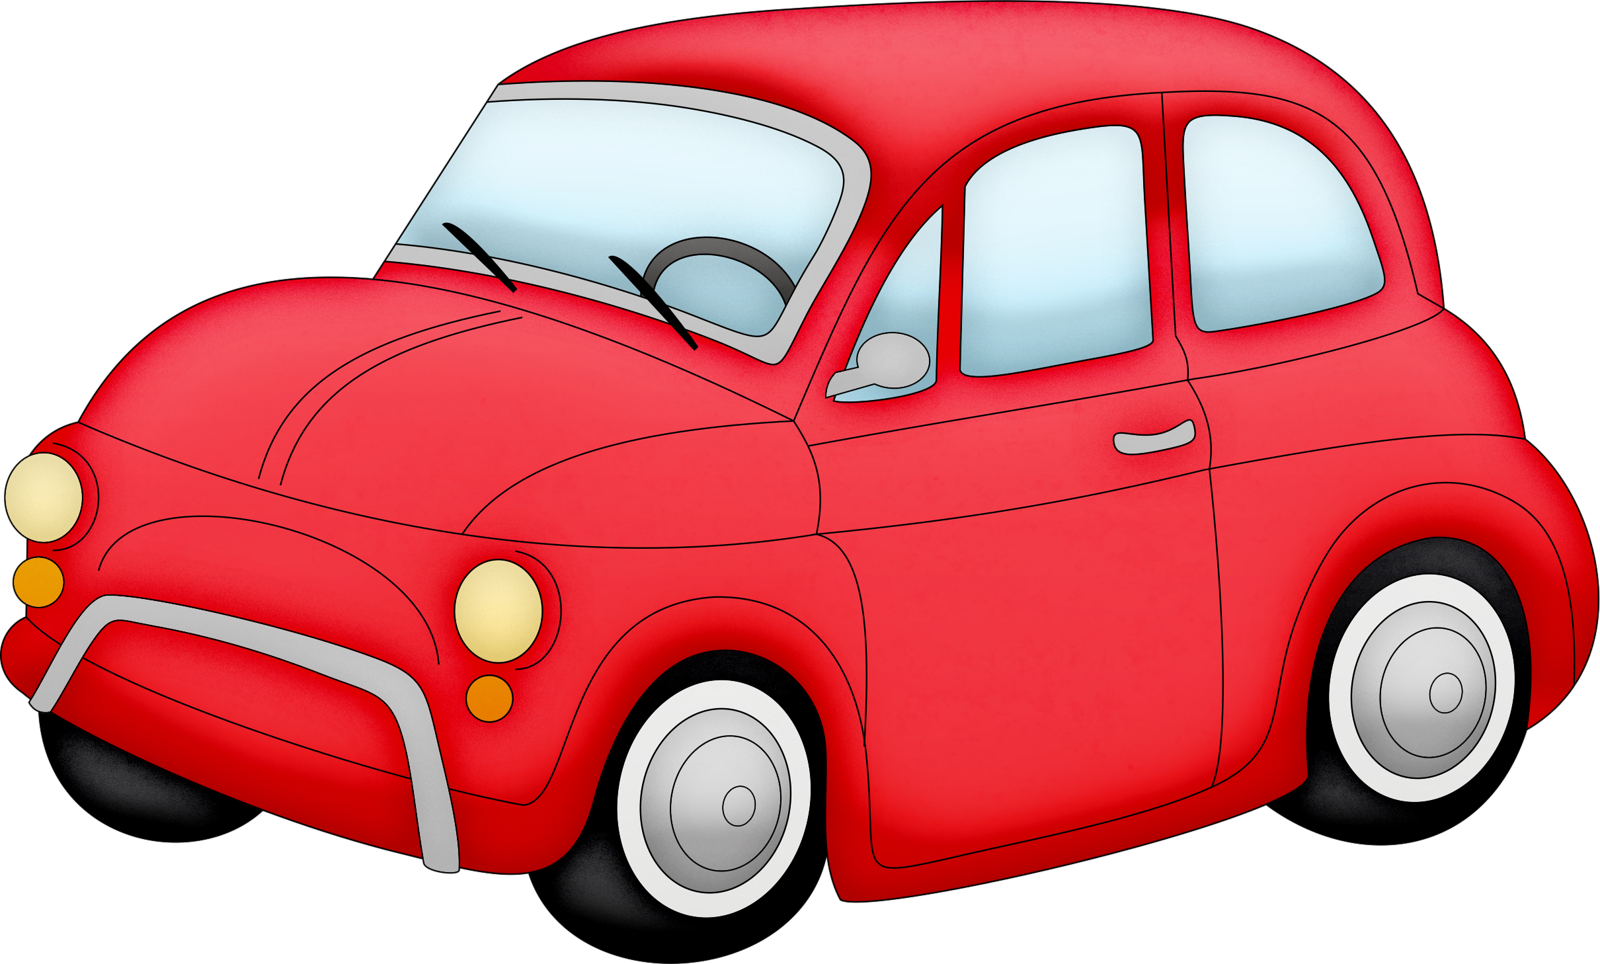 Red Cartoon Car Illustration PNG